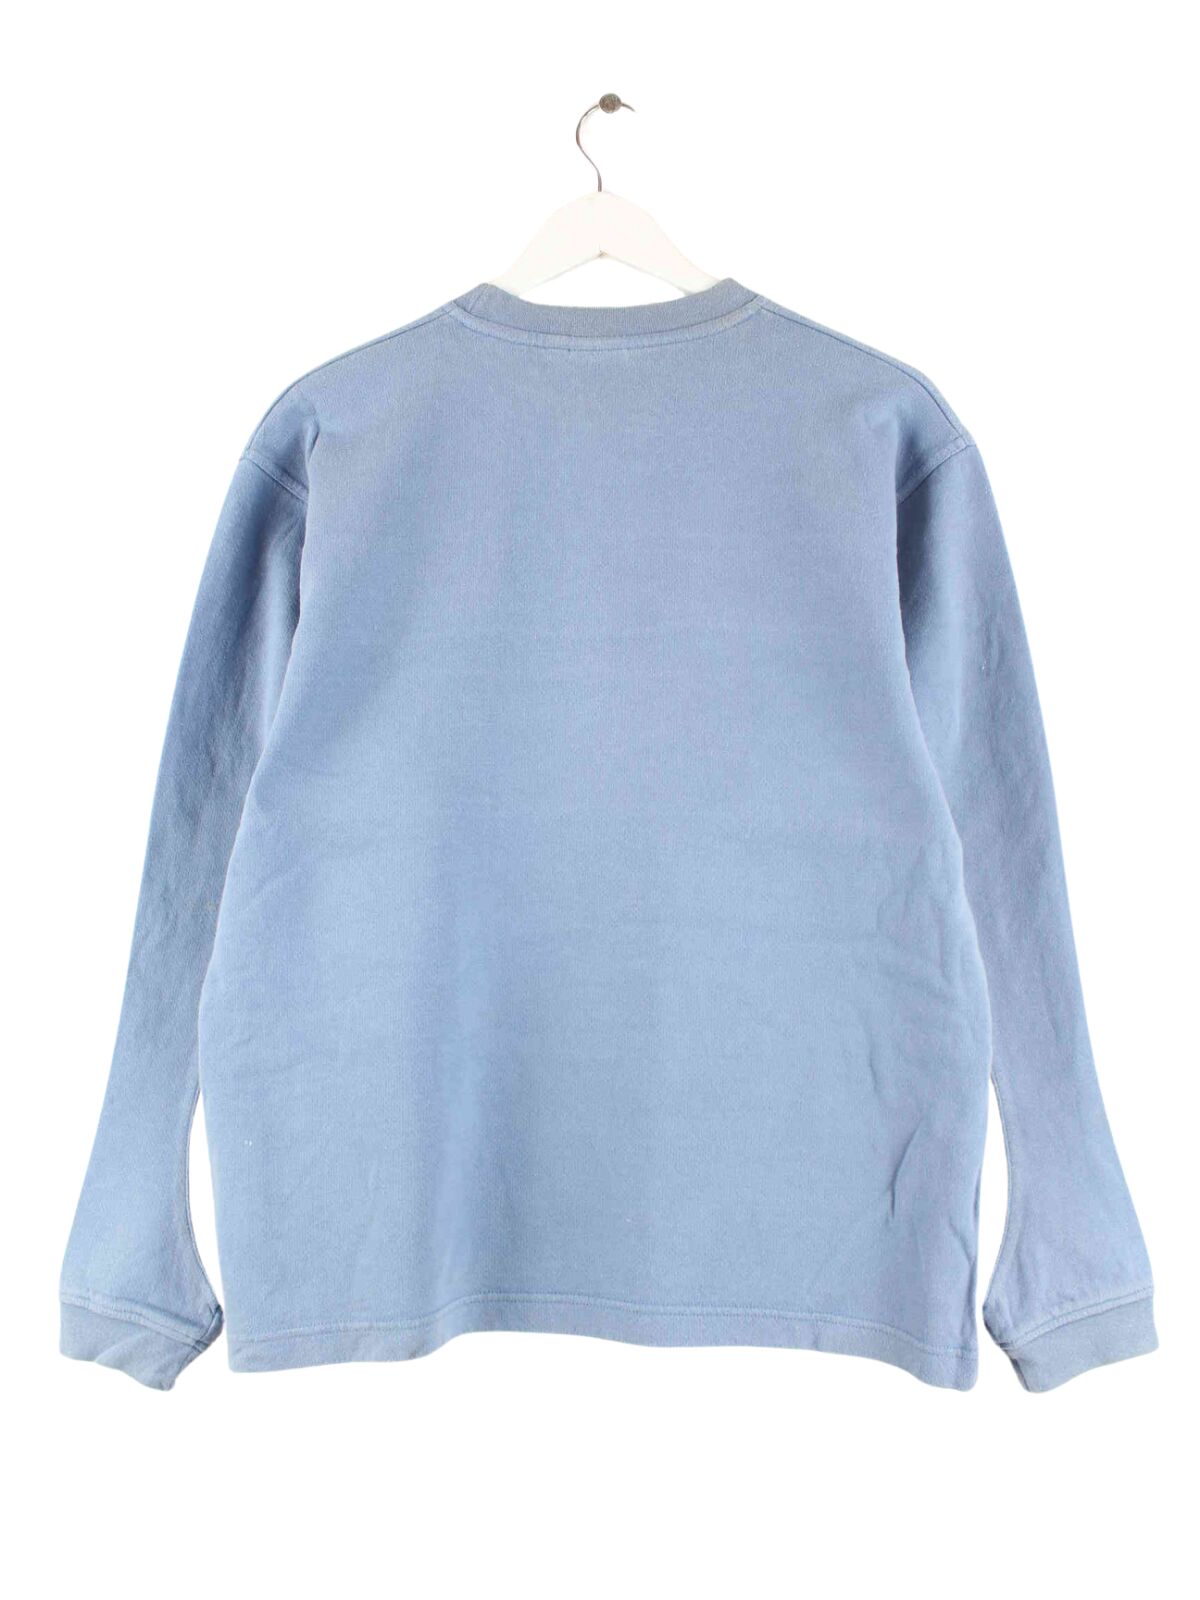 Quiksilver 90s Vintage Print Sweater Blau S (back image)